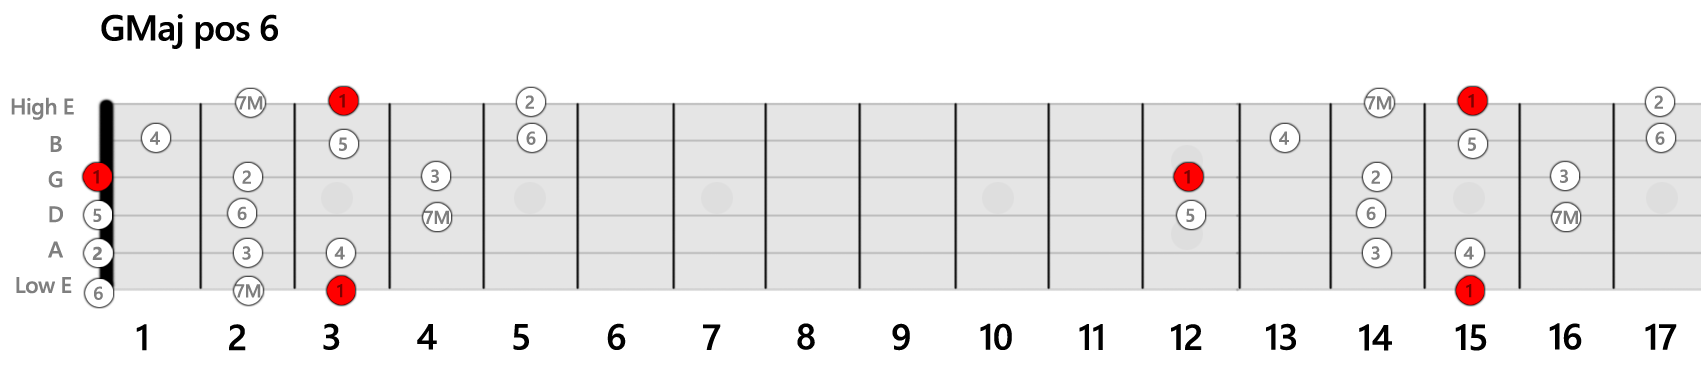 GMaj-Position-Guitar-Scale-6